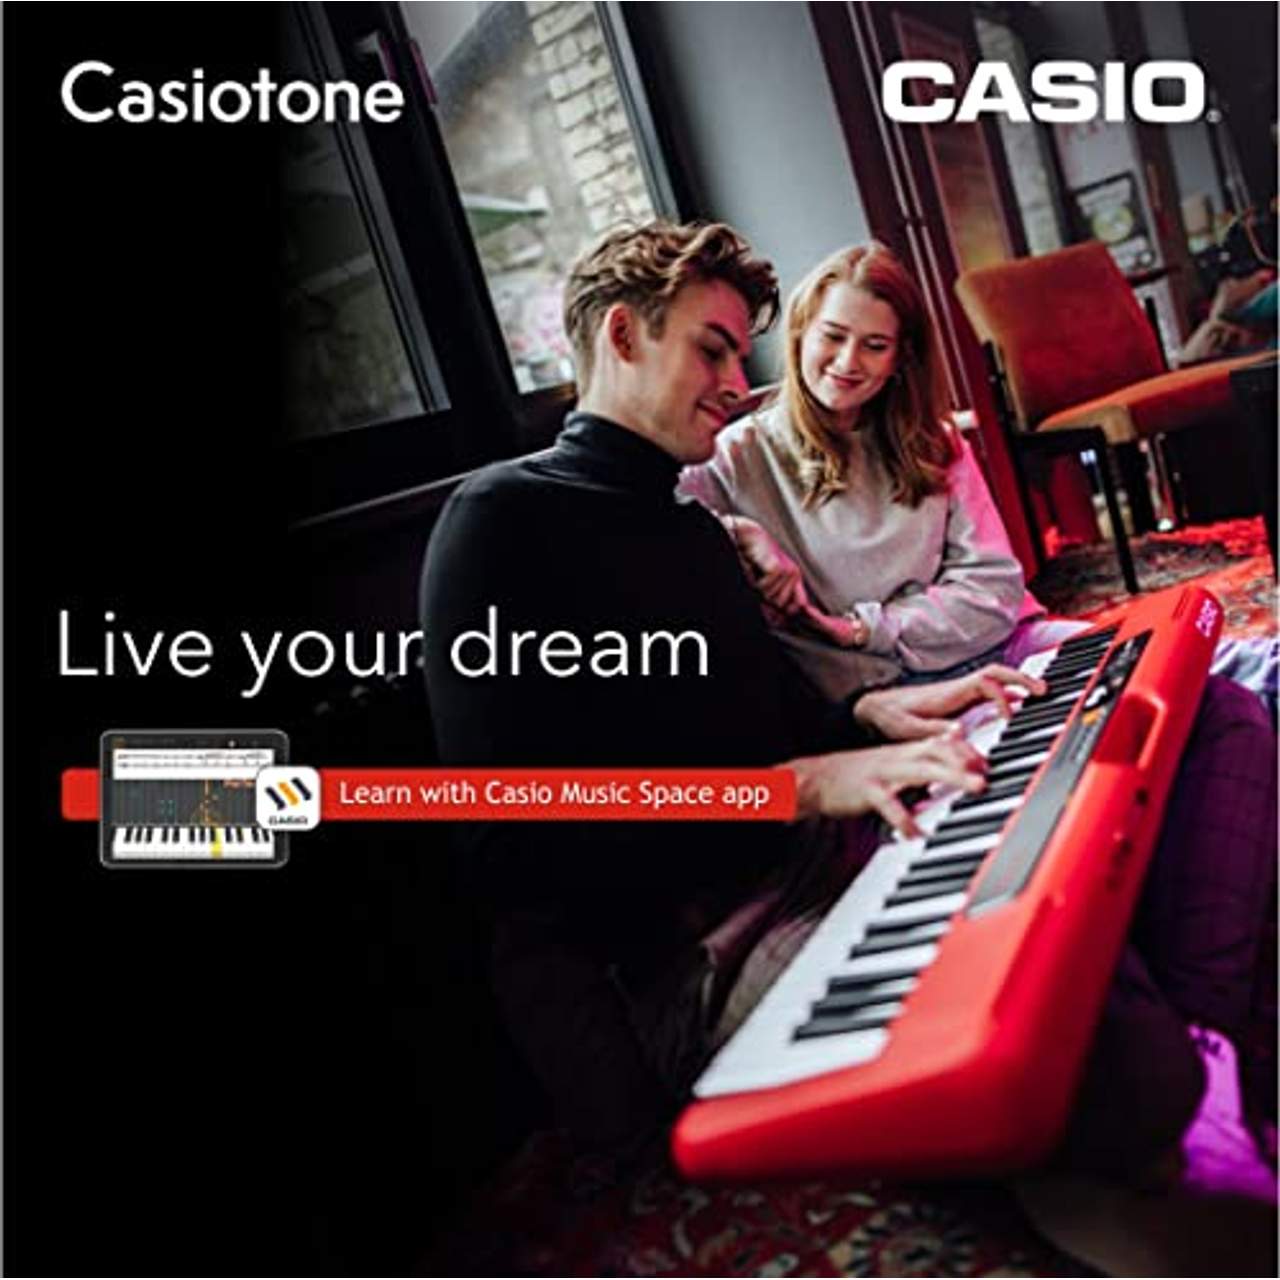 Casio CT-S200RD Keyboard